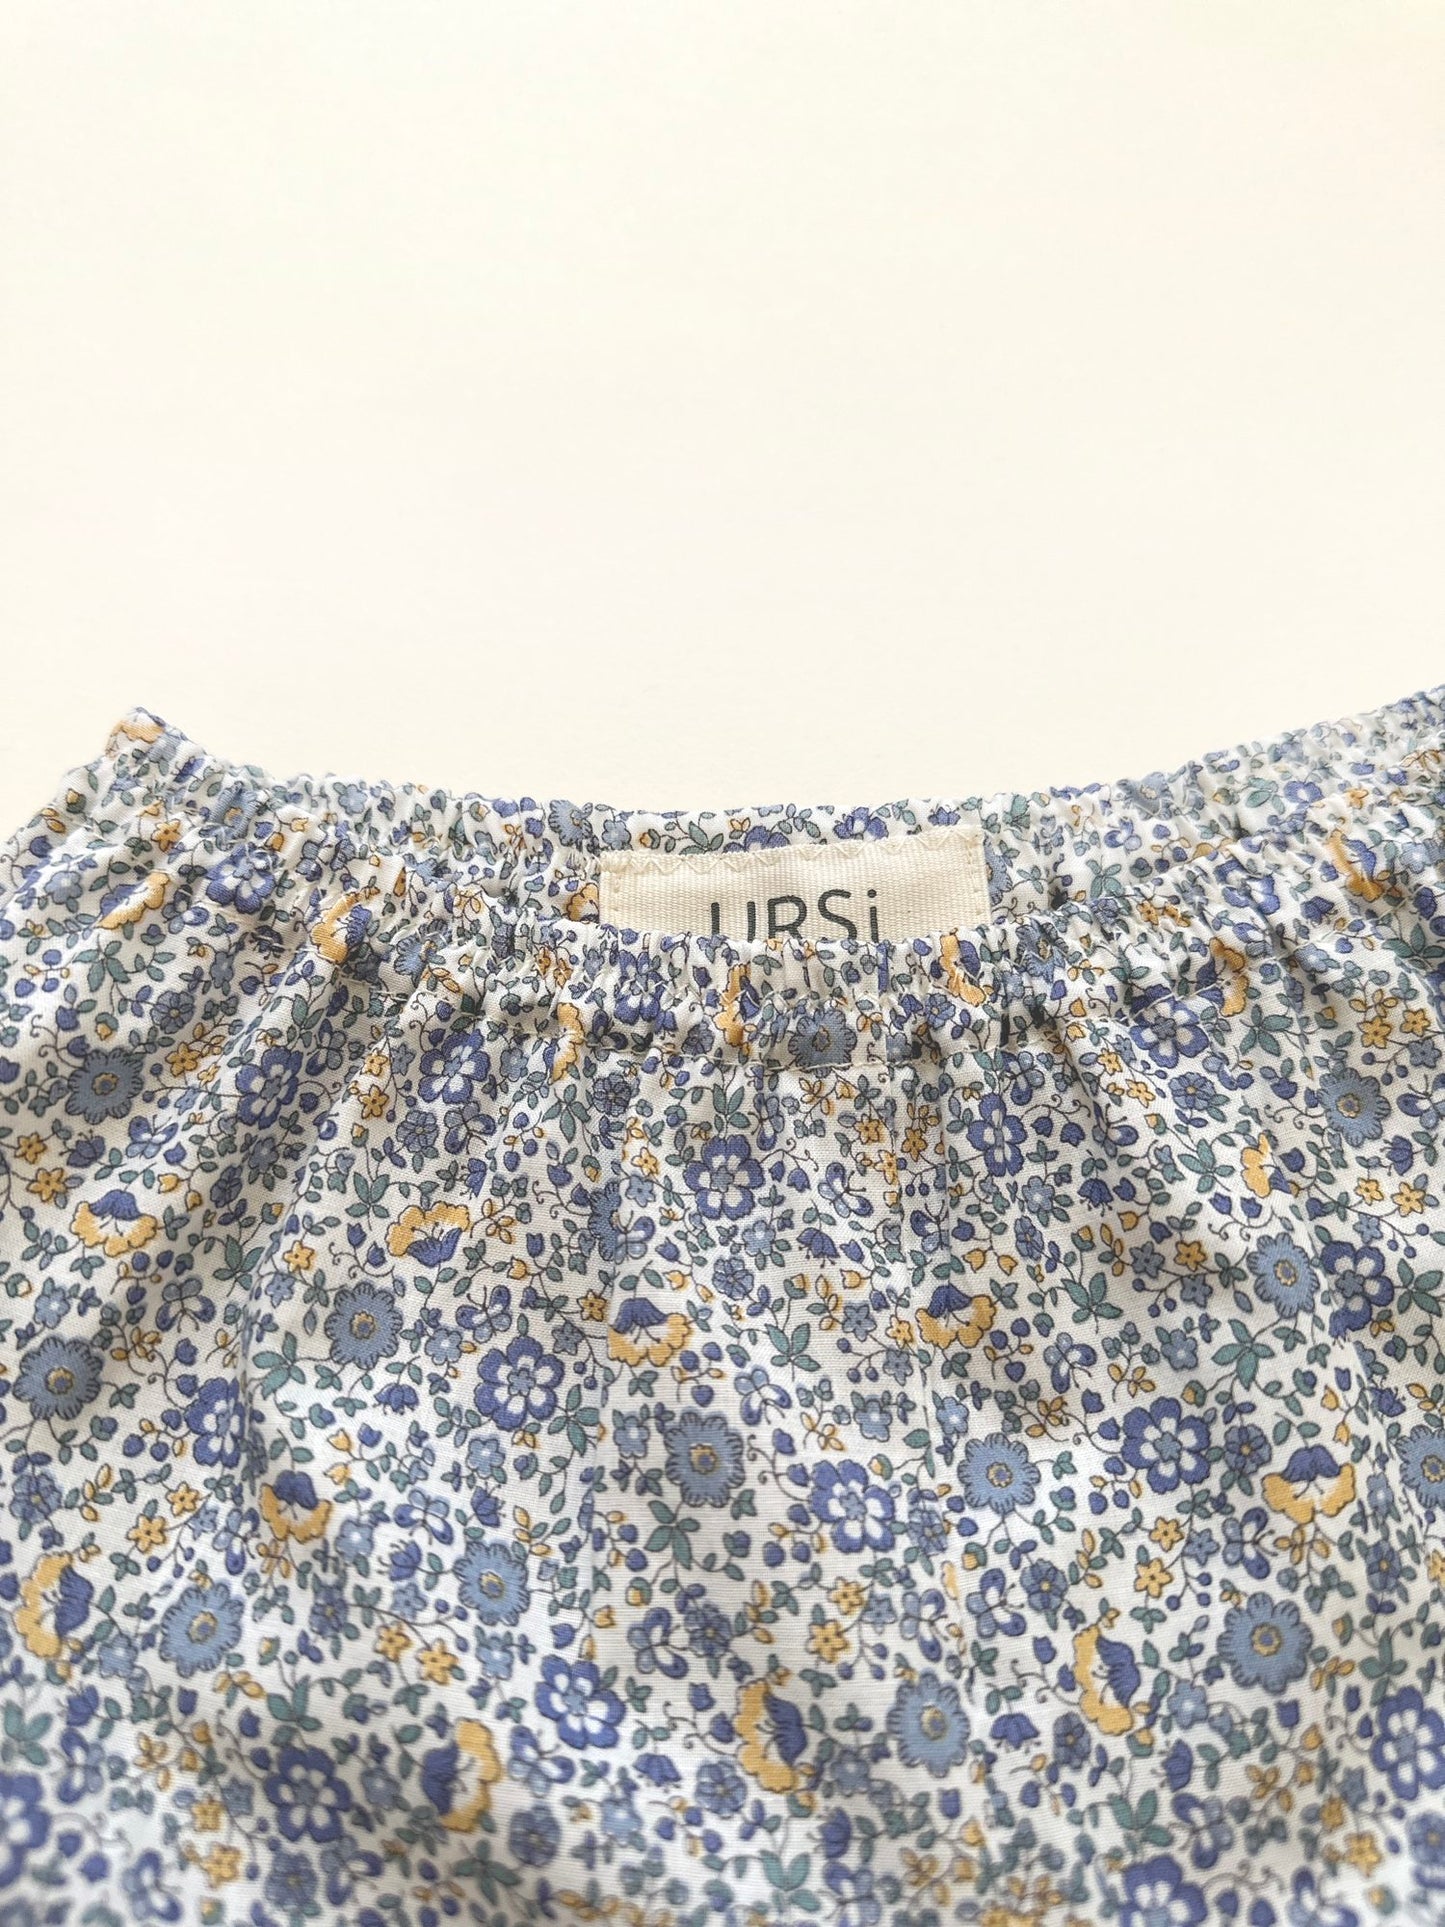 retro shorts | blue tone flowers